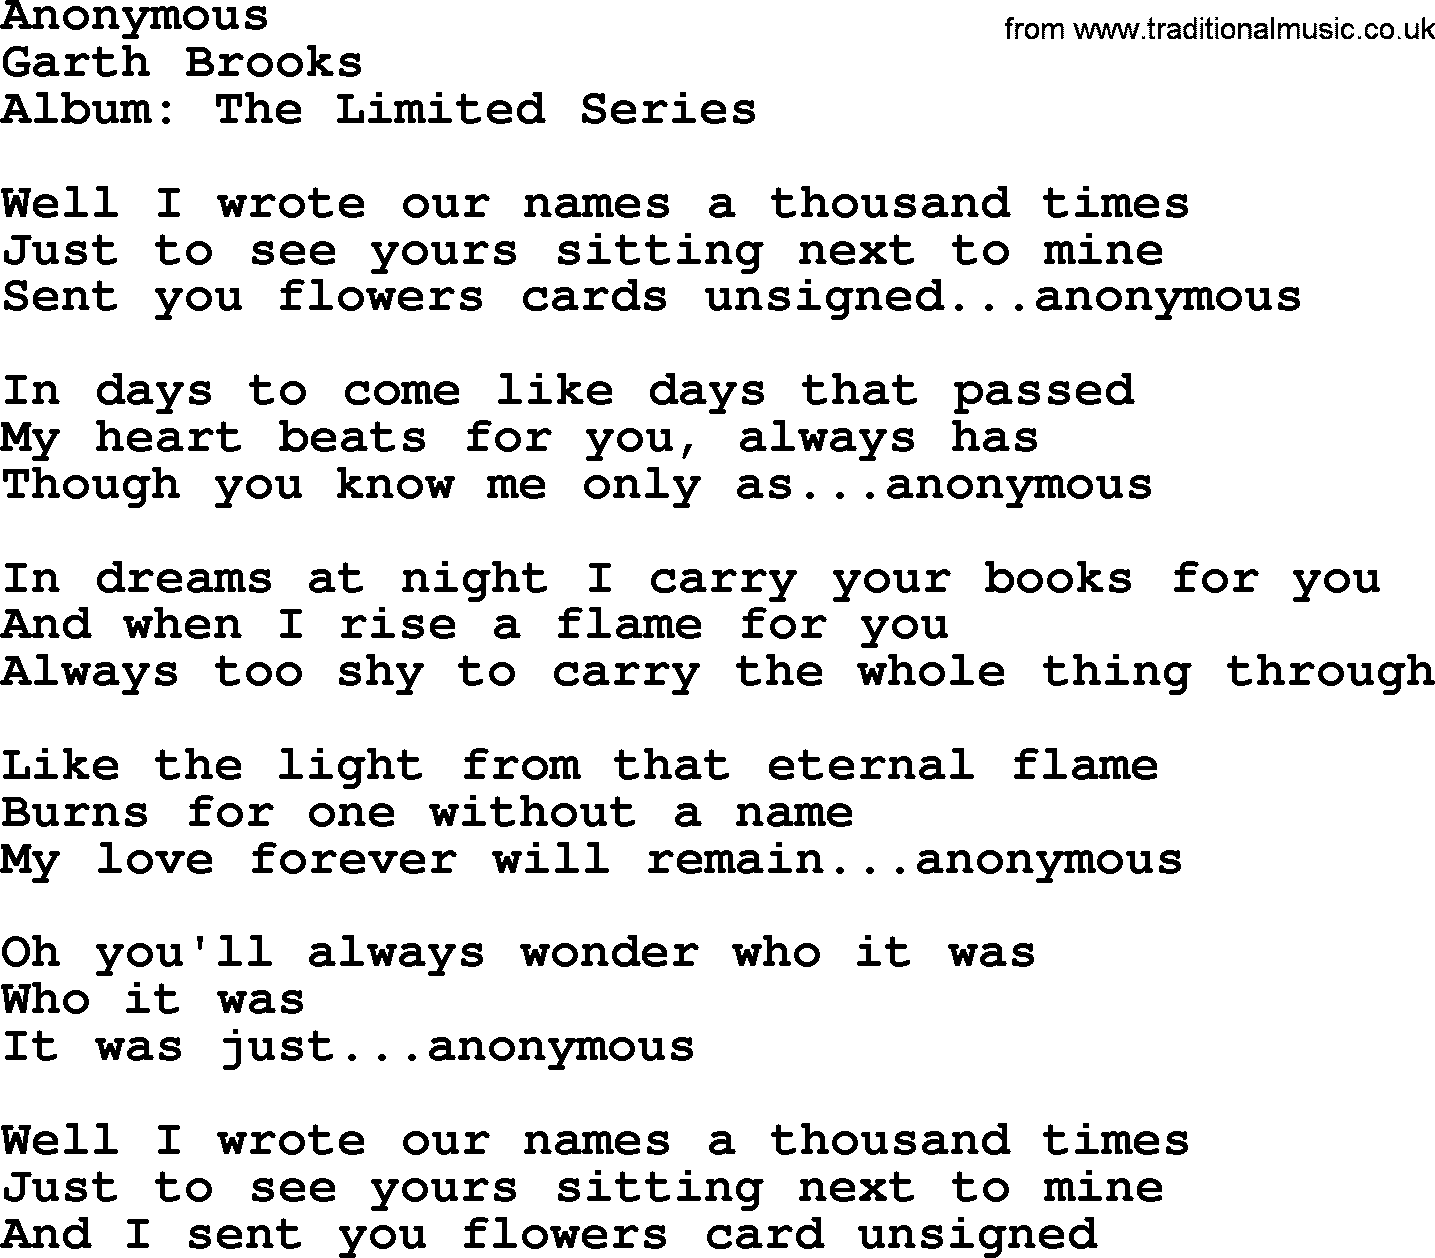 Garth Brooks song: Anonymous, lyrics